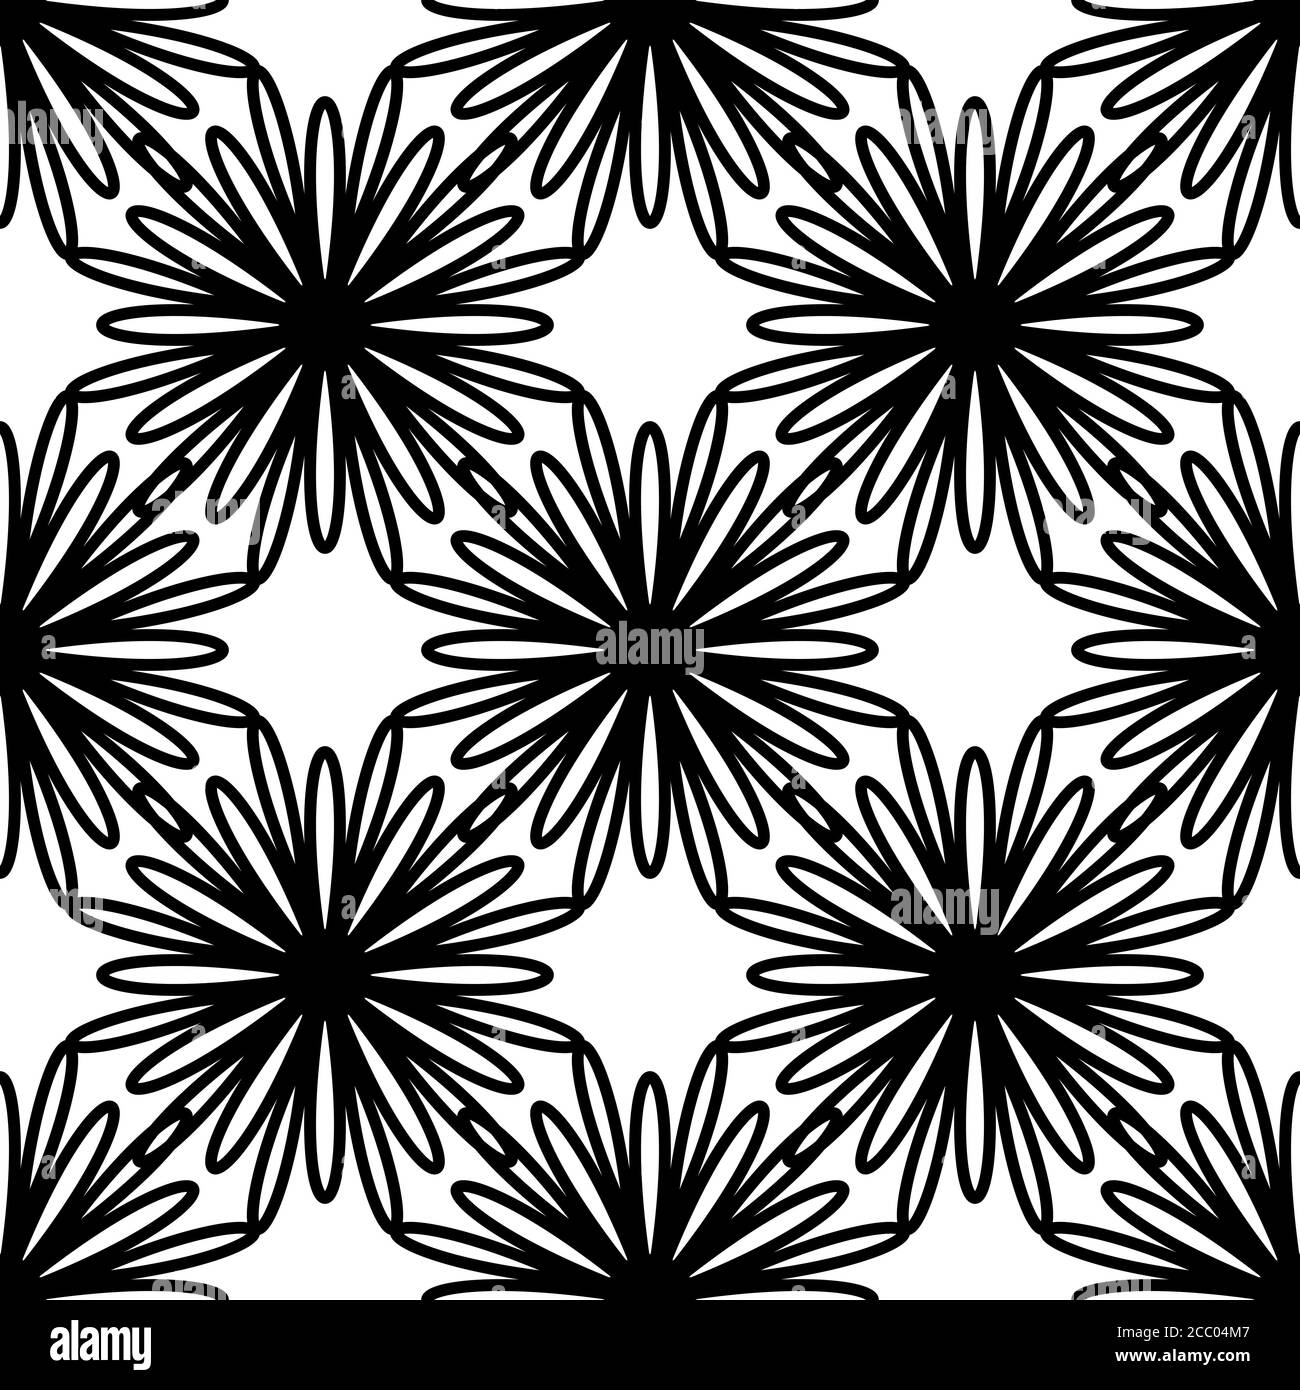 Circular Flower decorative patterns Stock Vector